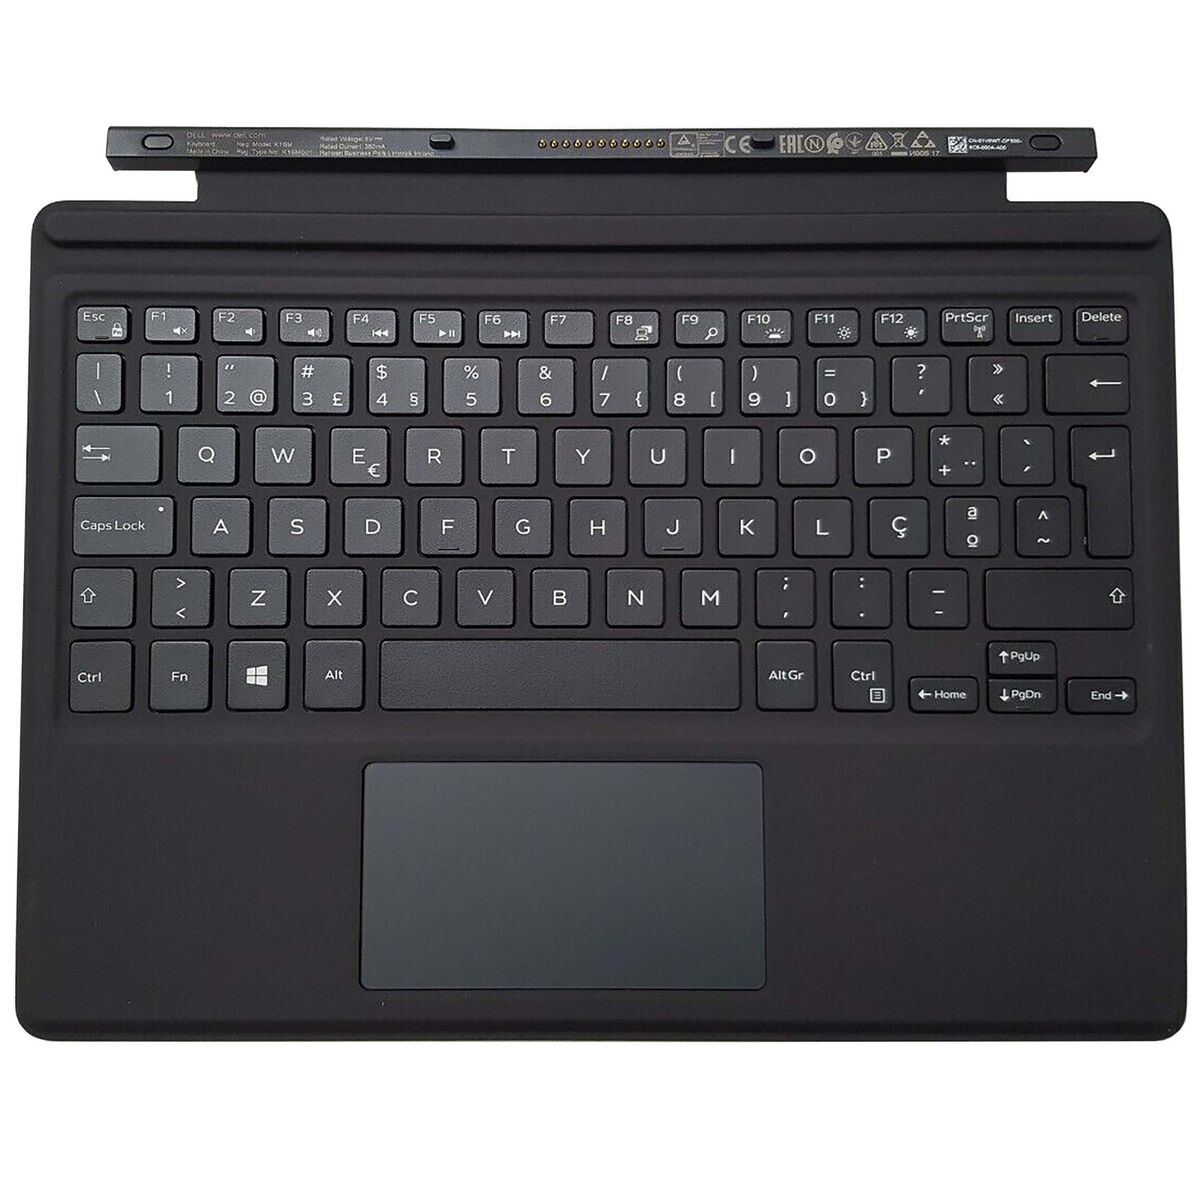 Dell PC90-BK-UK Travel Keyboard - Black